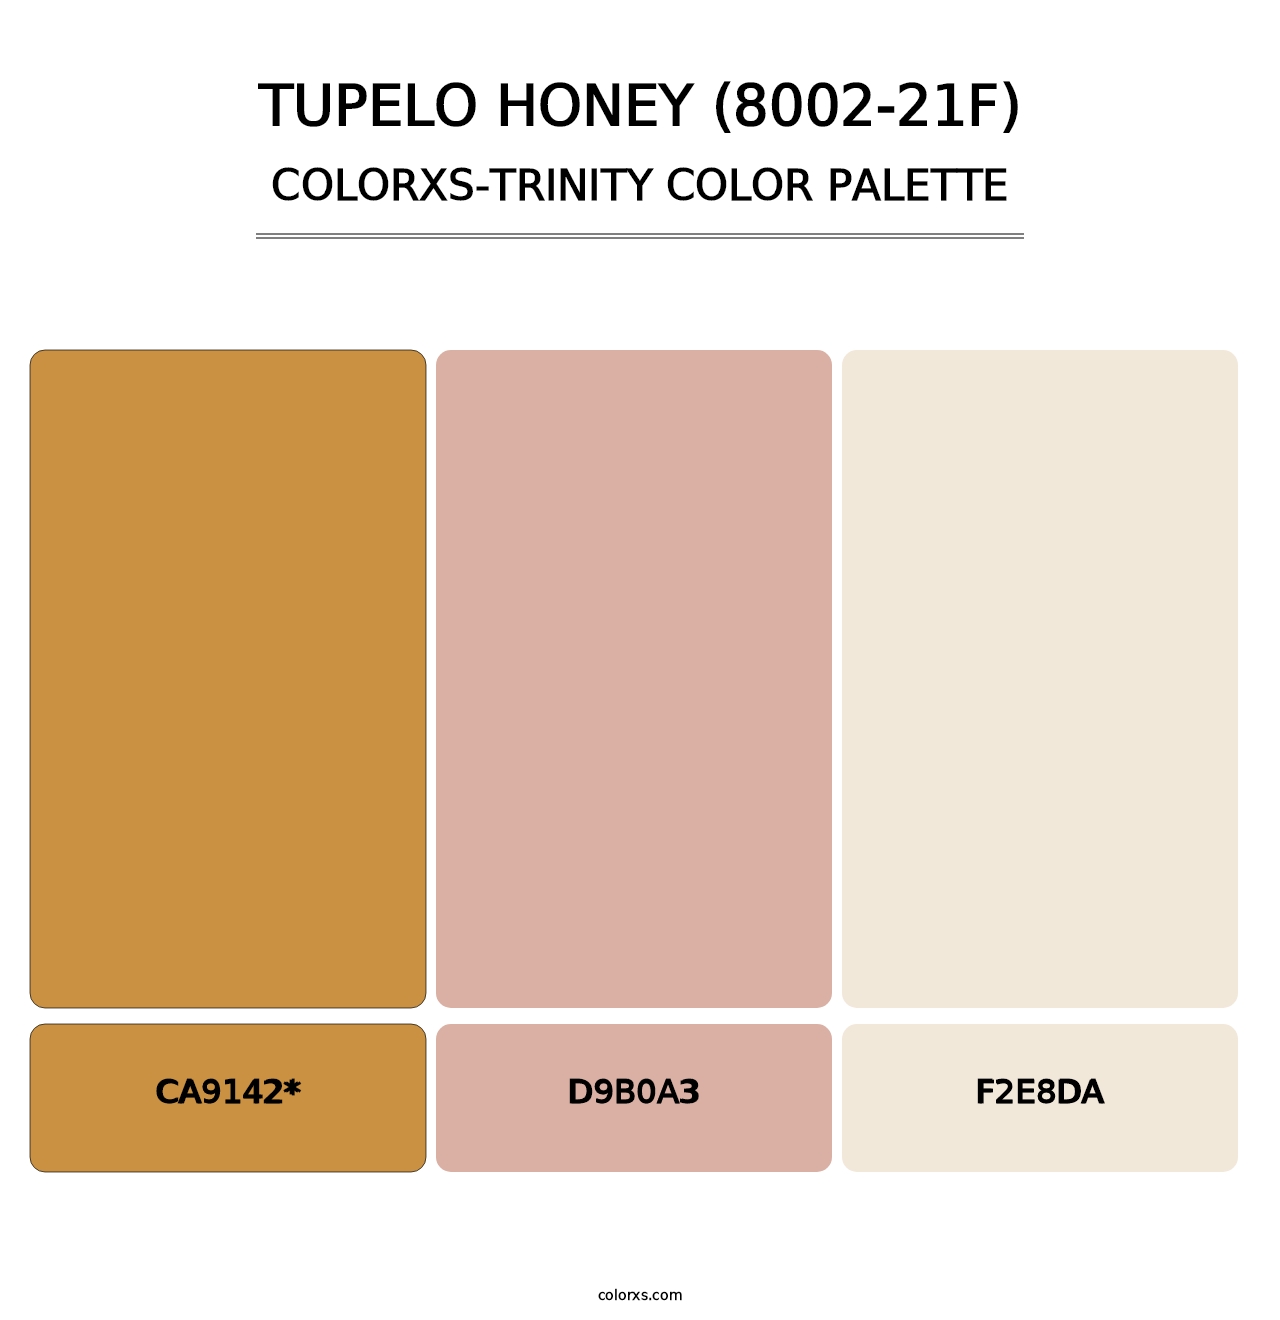 Tupelo Honey (8002-21F) - Colorxs Trinity Palette